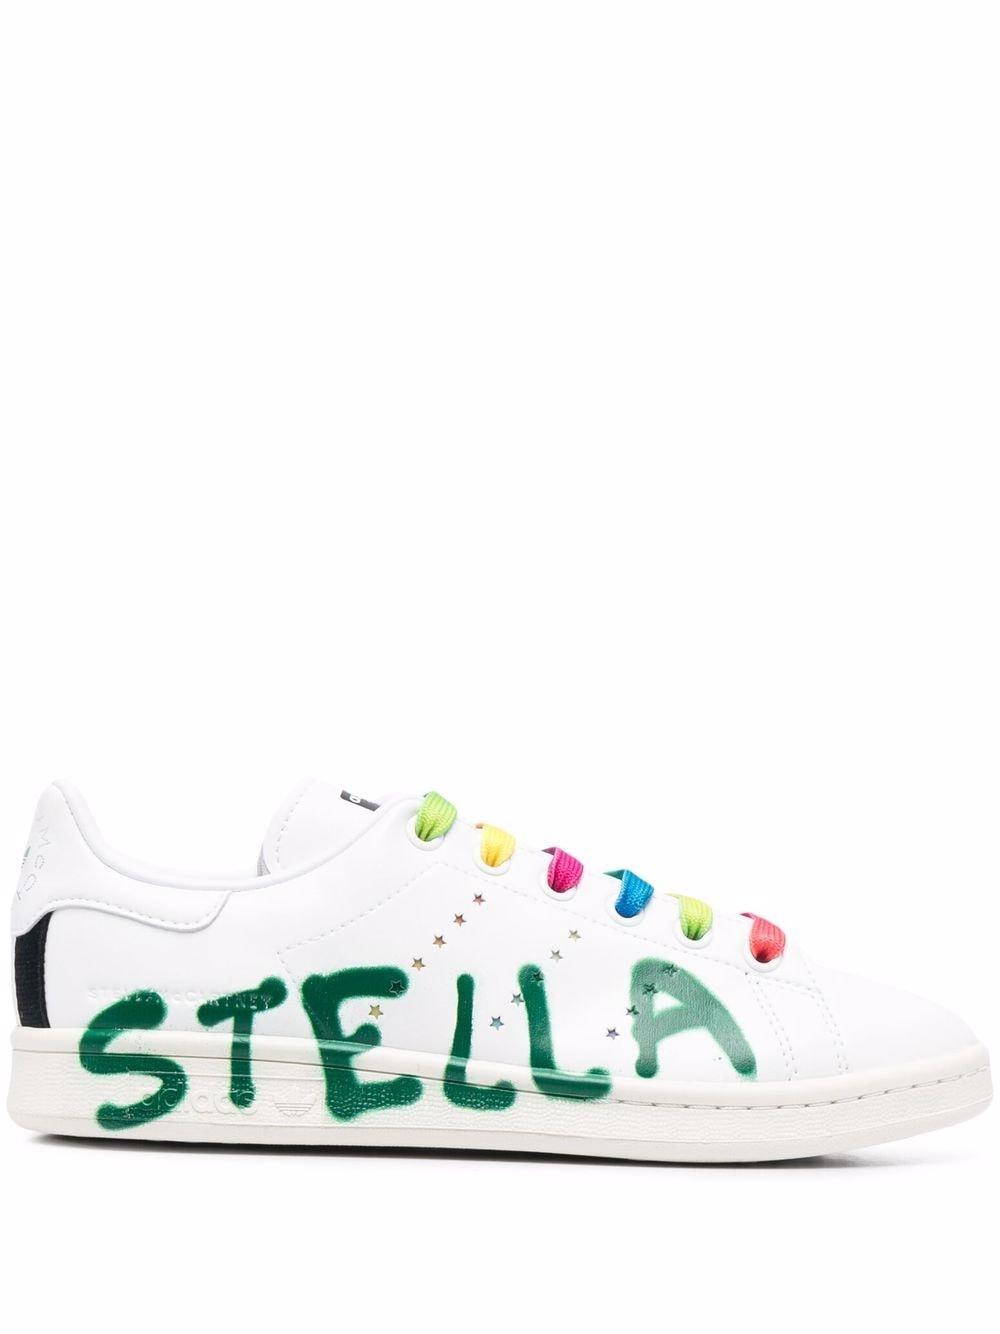 web Raad eens Regelen Stella McCartney X Ed Curtis Stan Smith Vegan Sneakers in White | Lyst